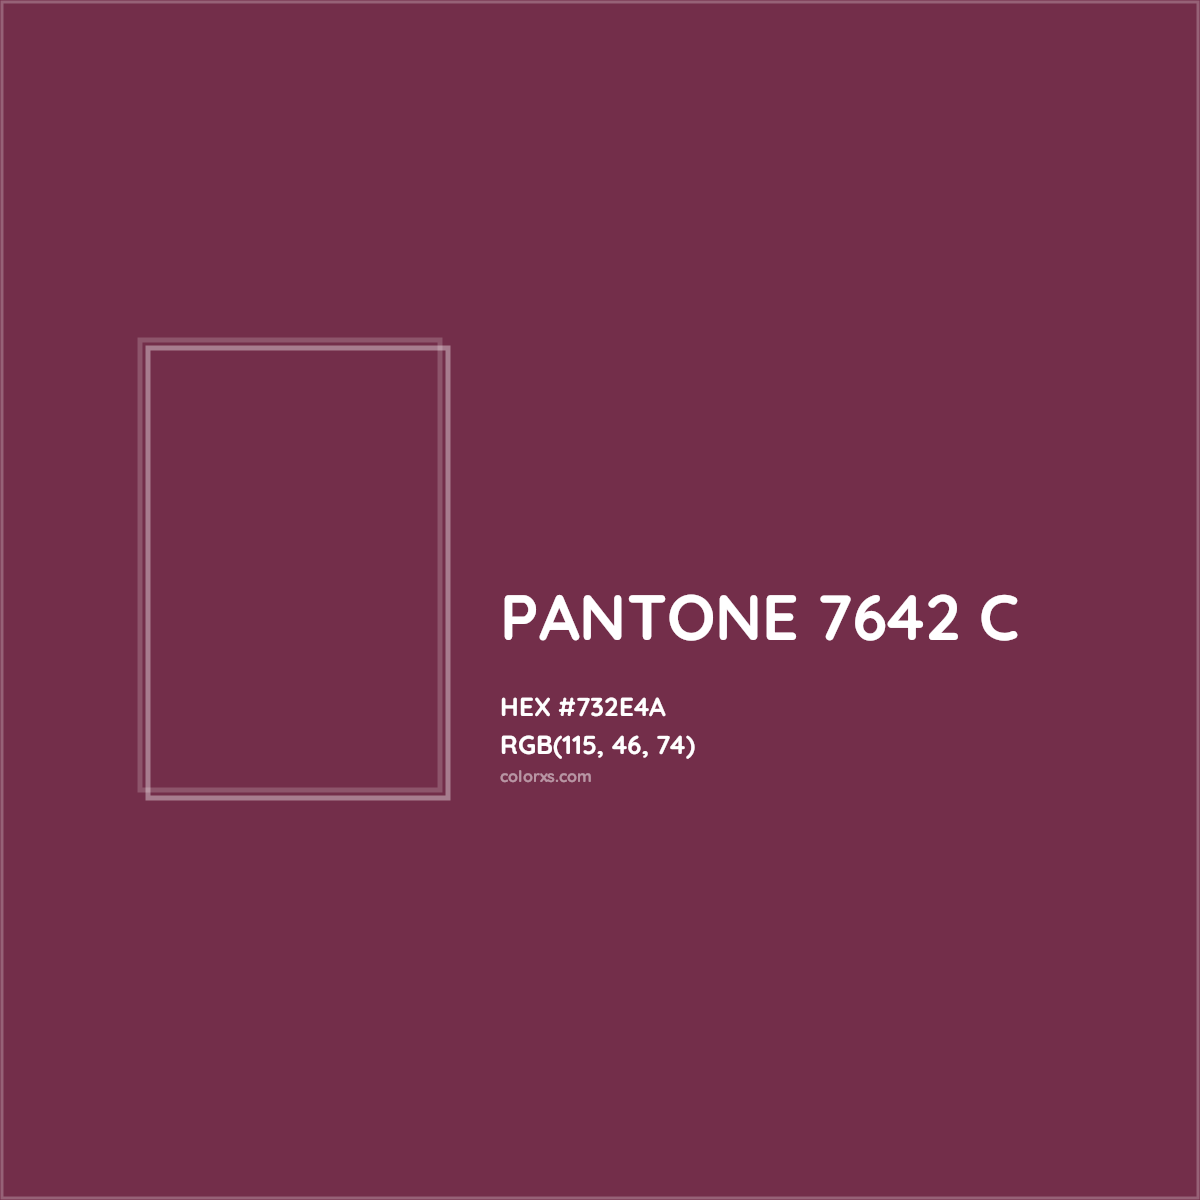 HEX #732E4A PANTONE 7642 C CMS Pantone PMS - Color Code